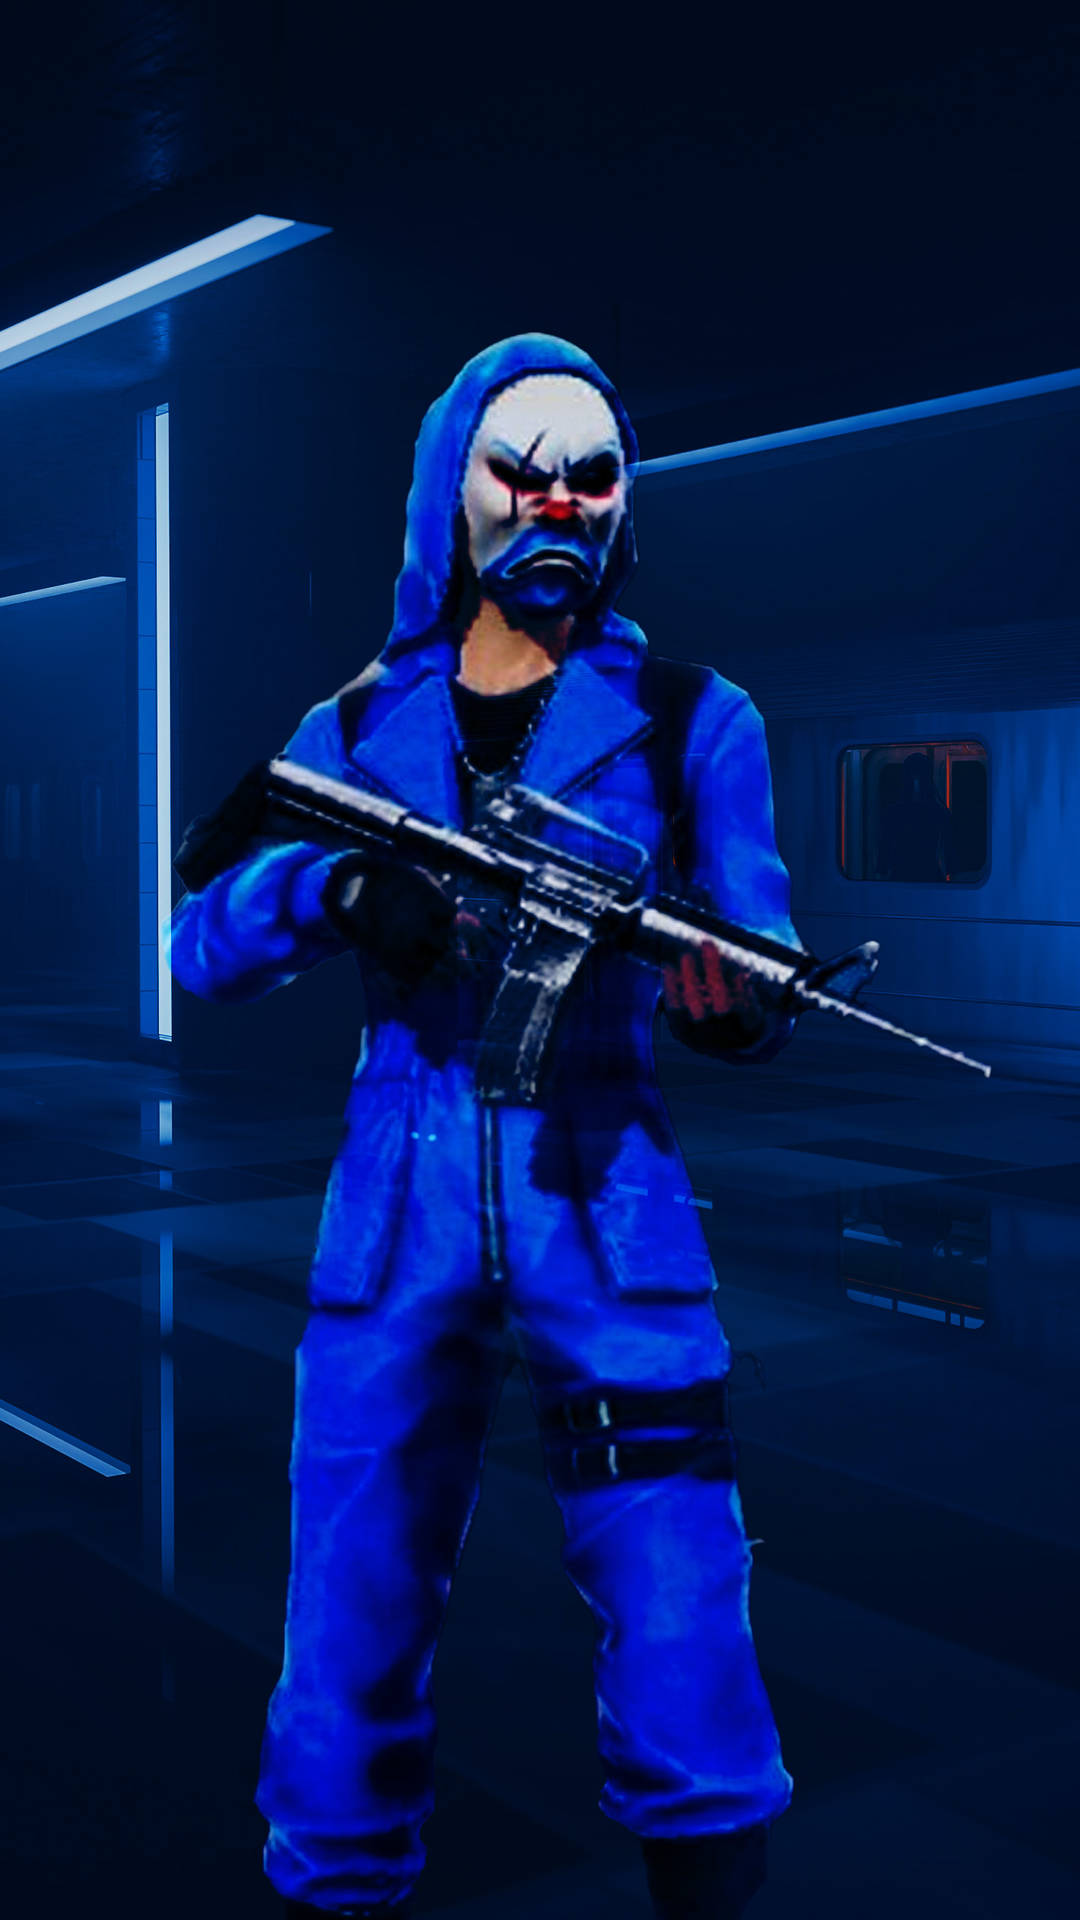 Blue Criminal Bundle With Weapon Wallpaper